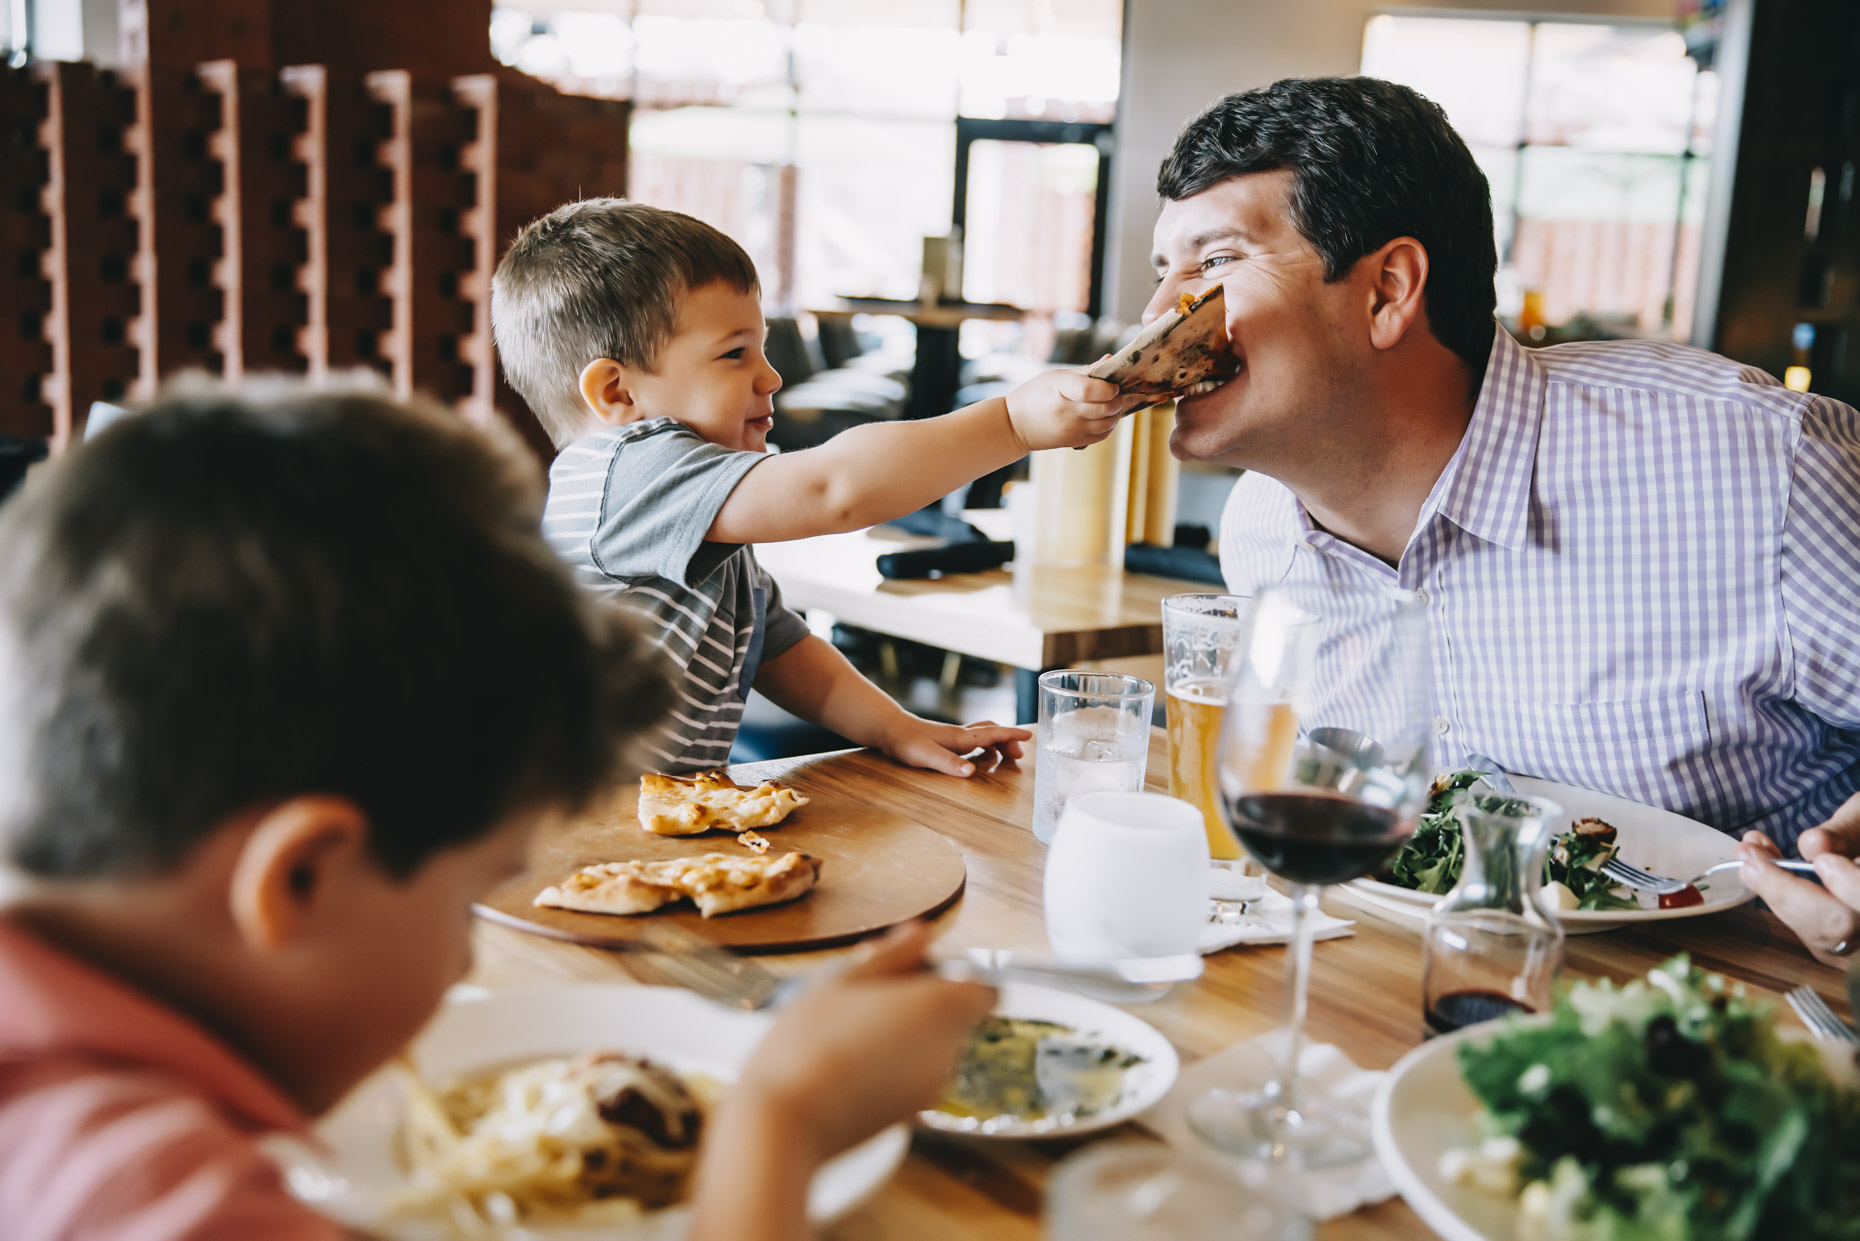 Boy feeding dad bite of his pizza in restaurant